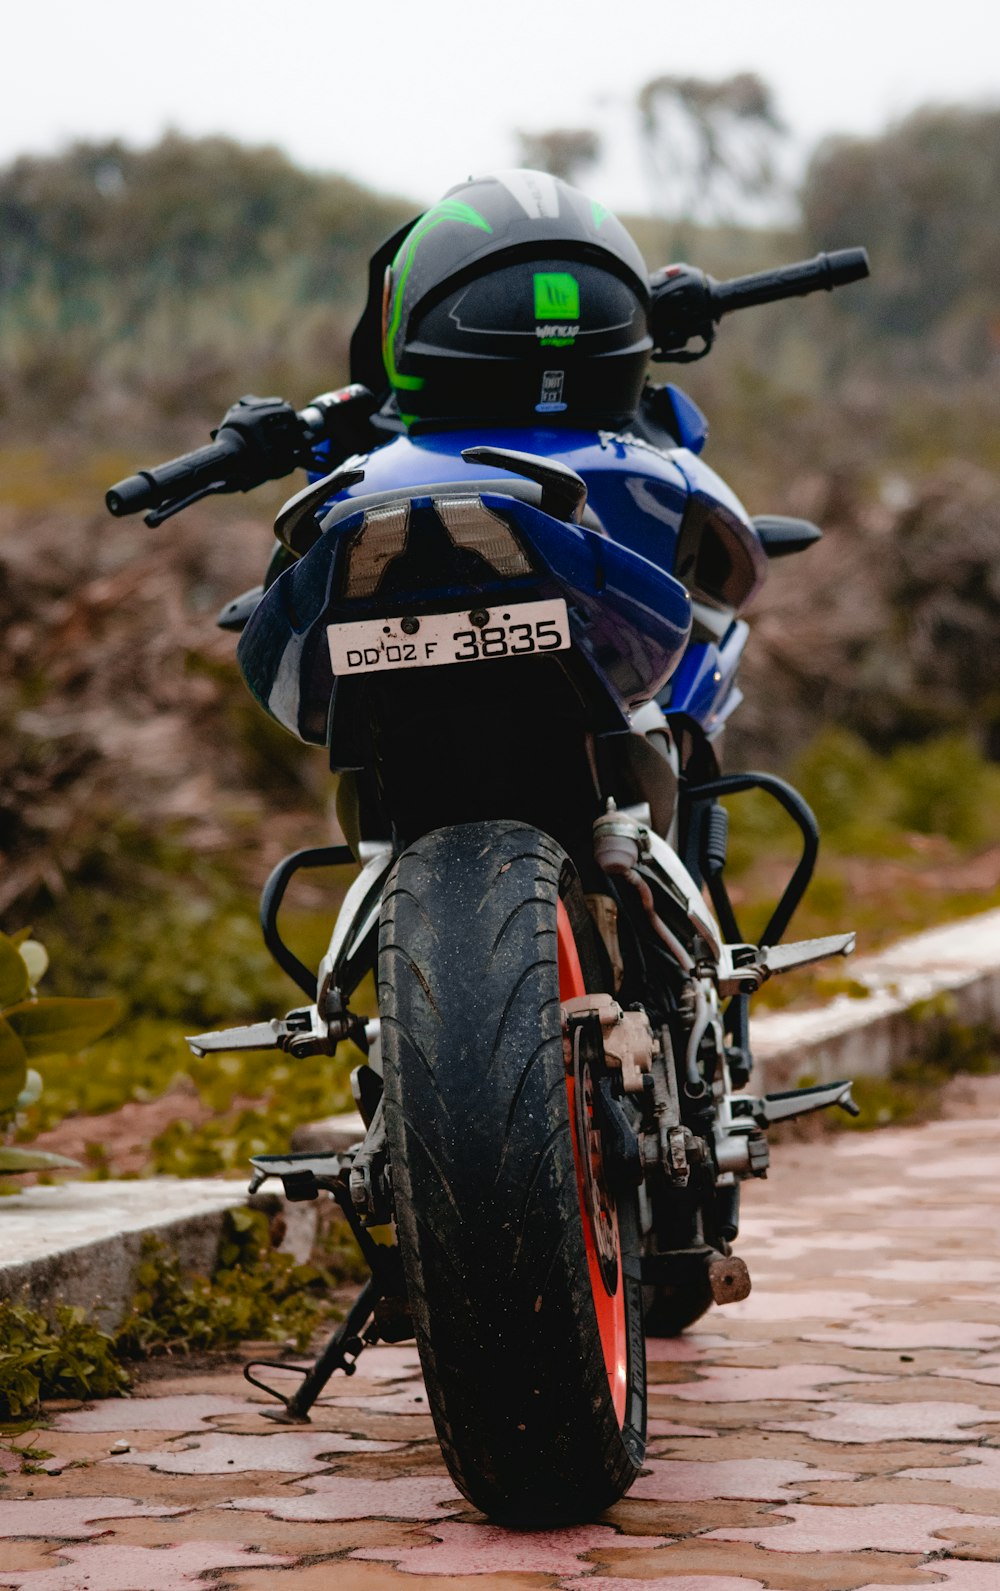 blue and black honda motorcycle